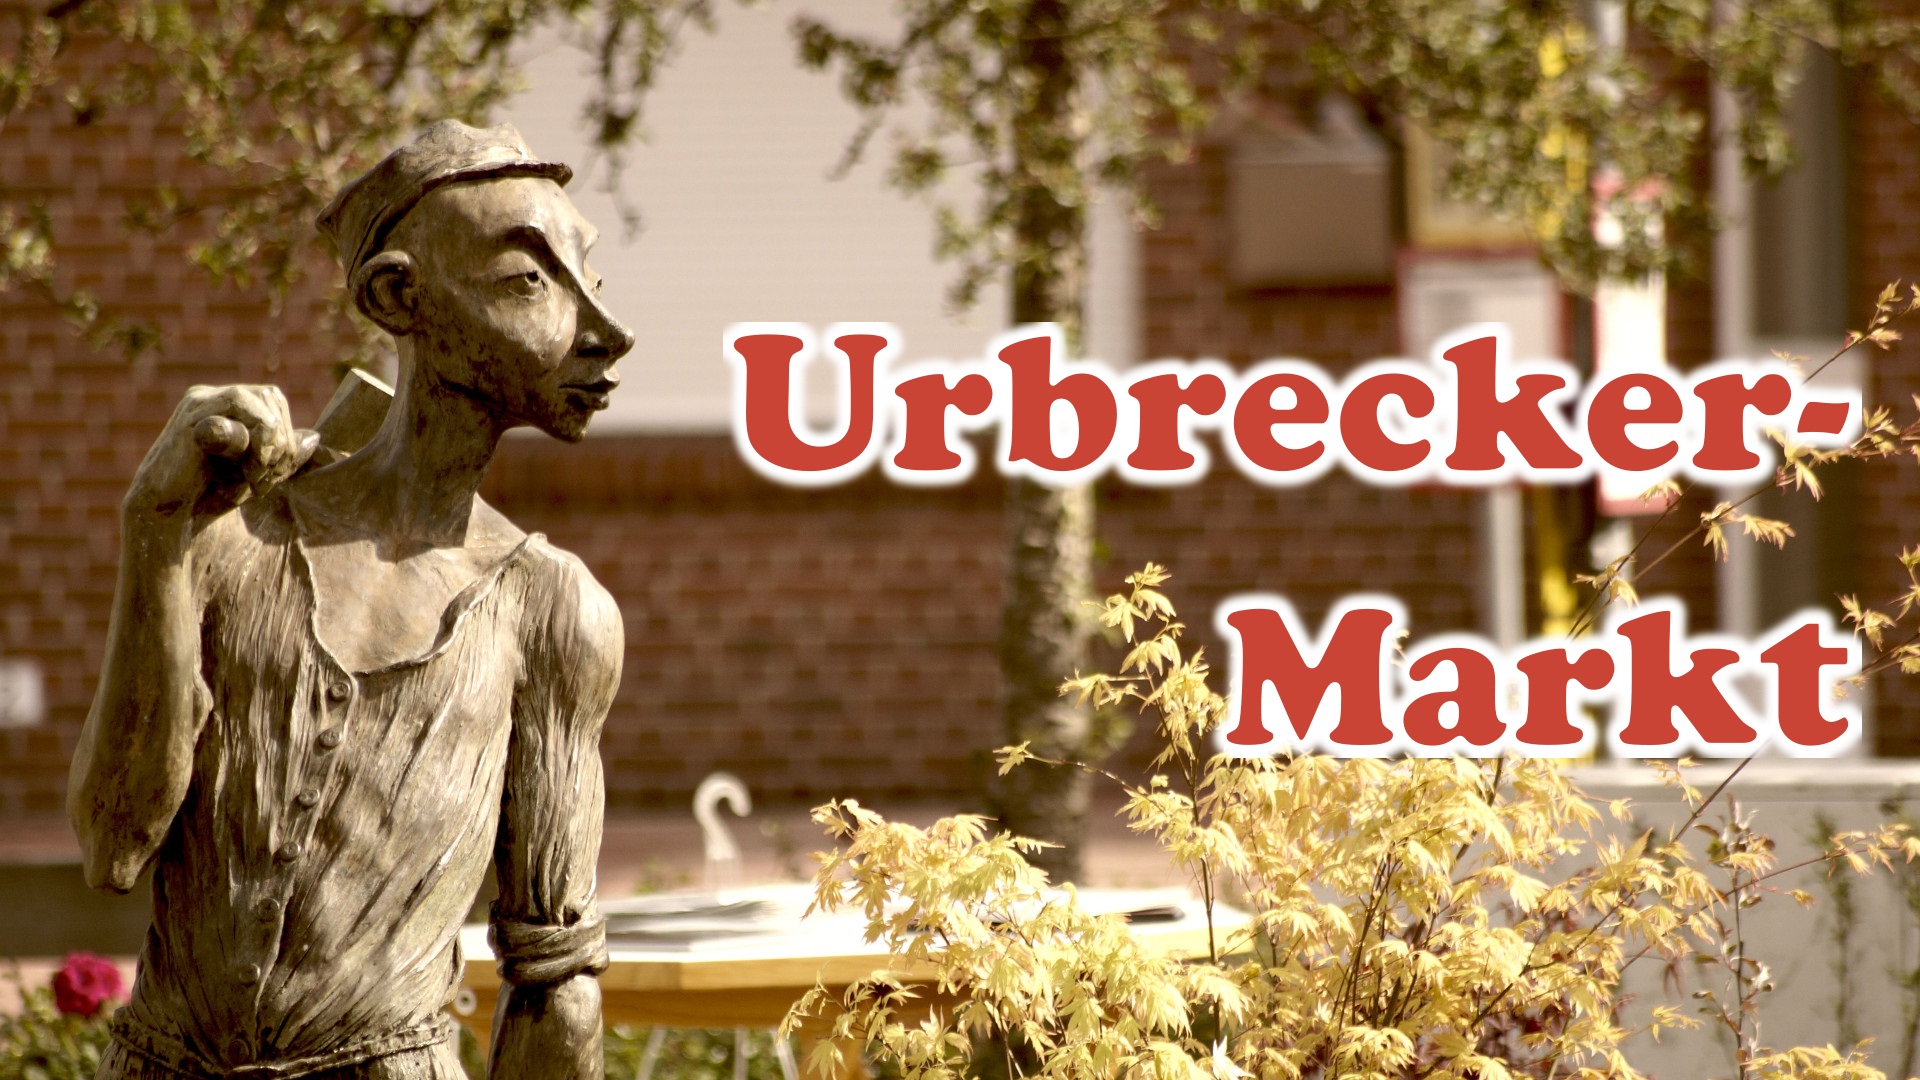 Urbrecker-Markt